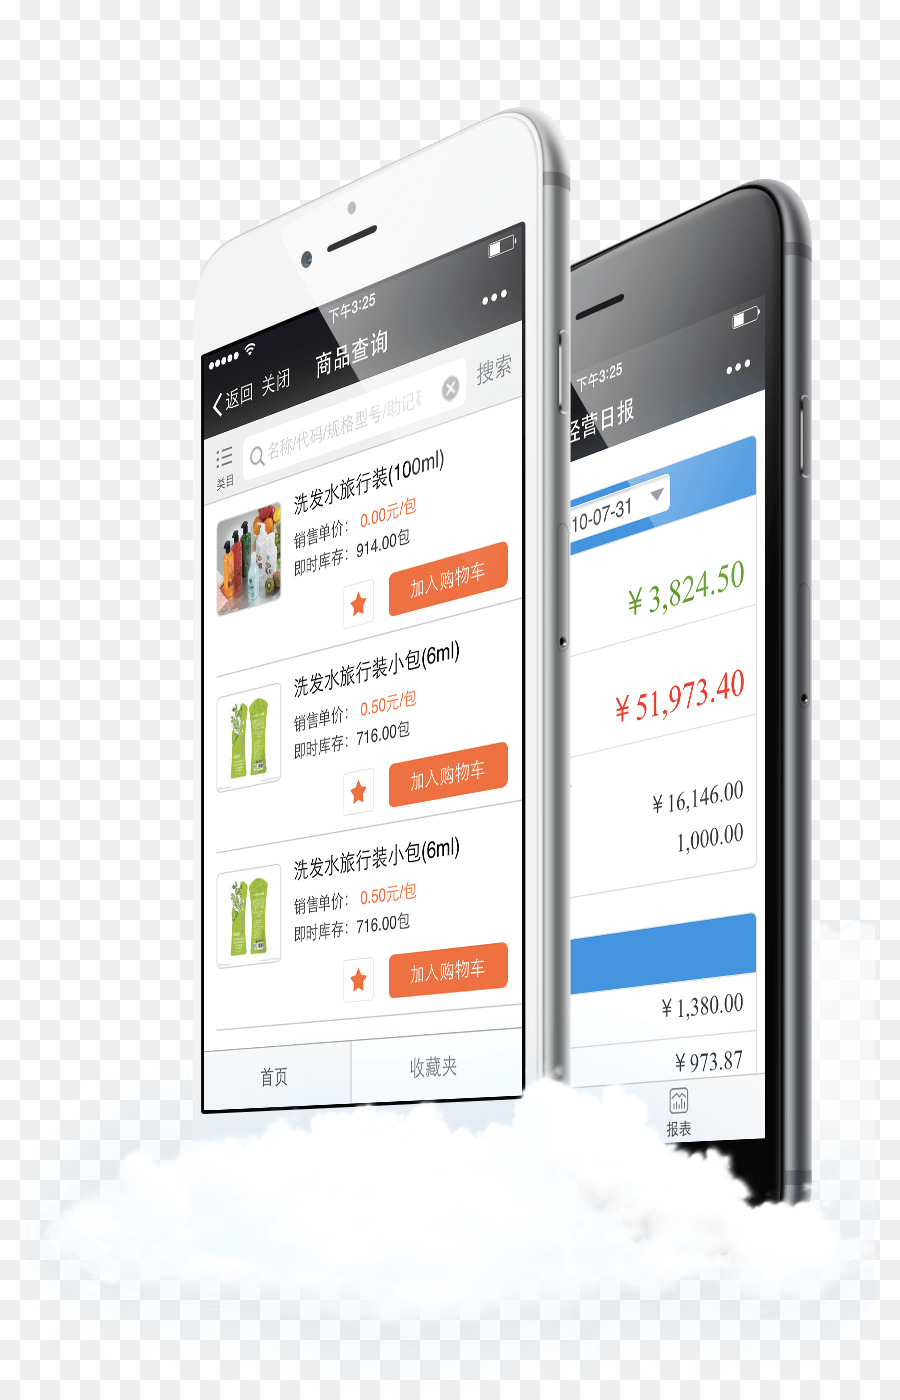 Smartphone, Telefoni Cellulari In Cina Marketing Management - smartphone